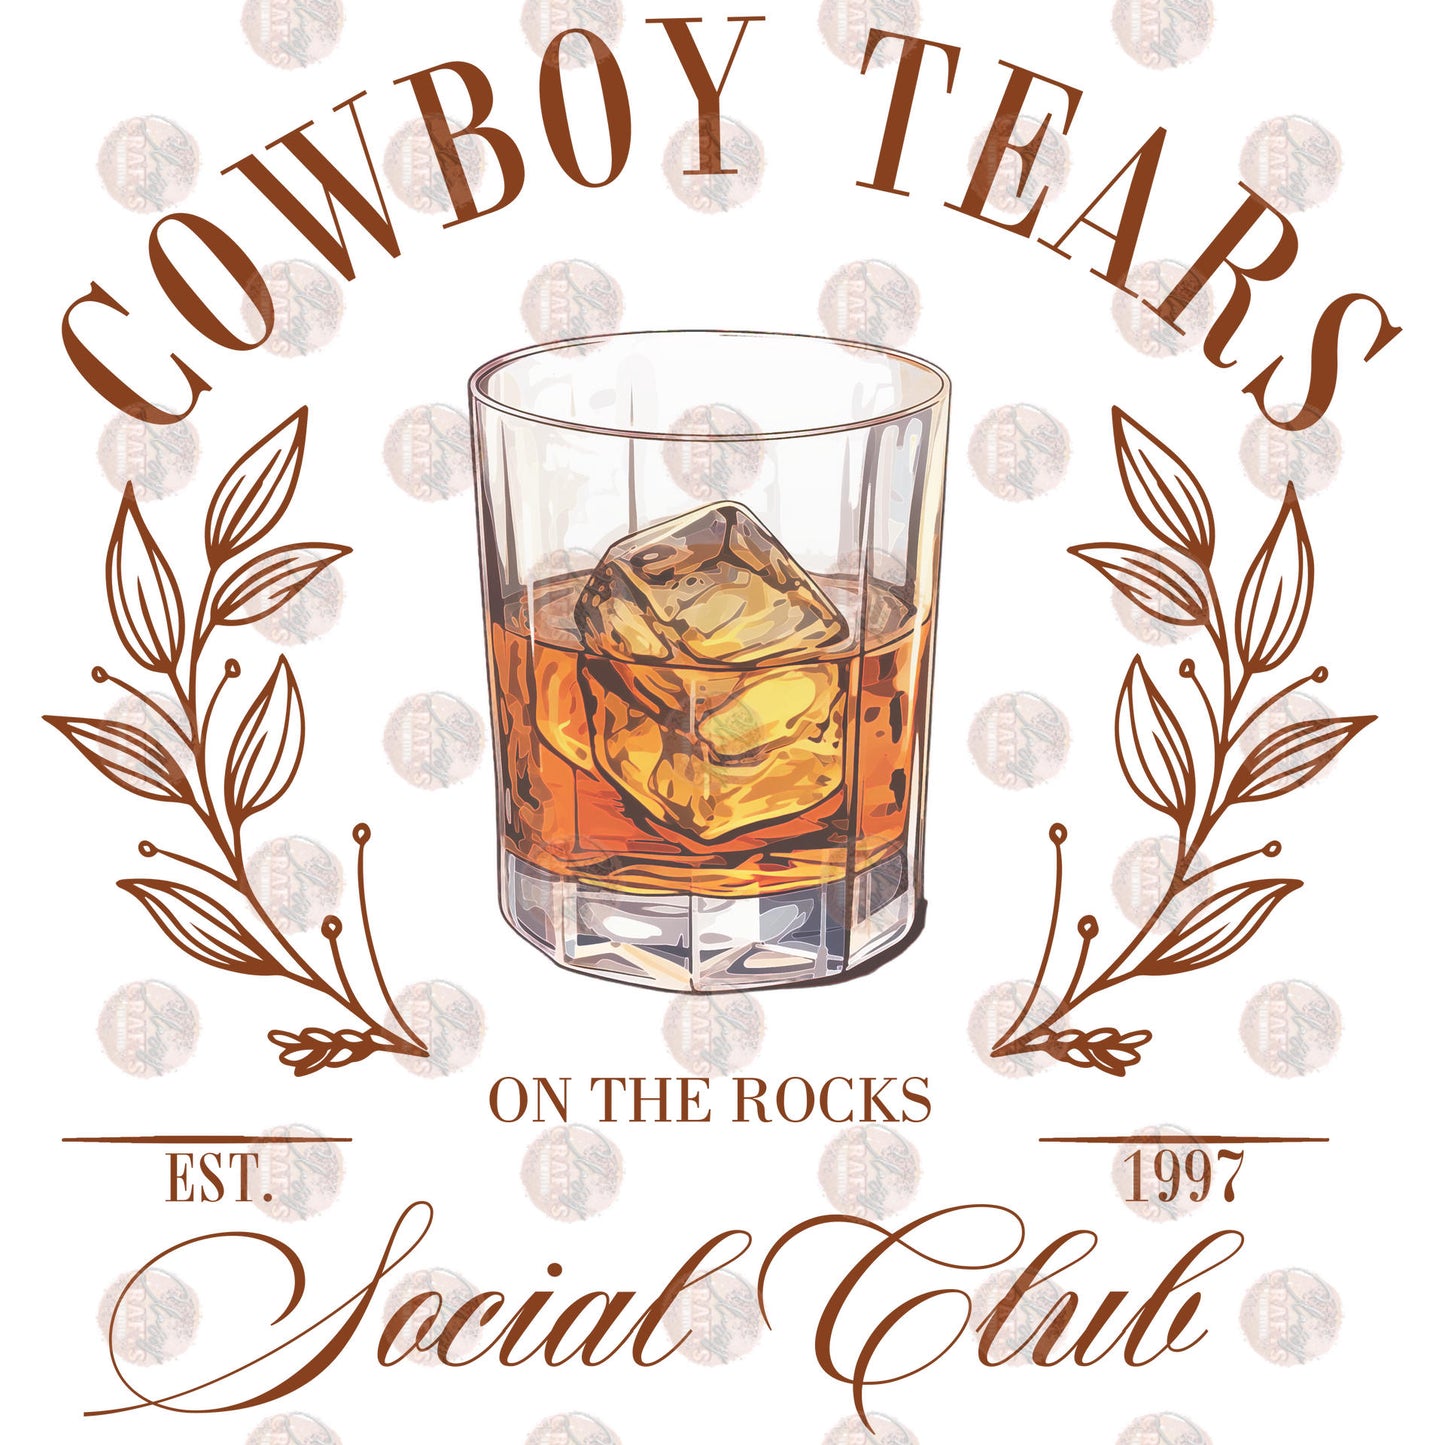 Cowboy Tears Transfer